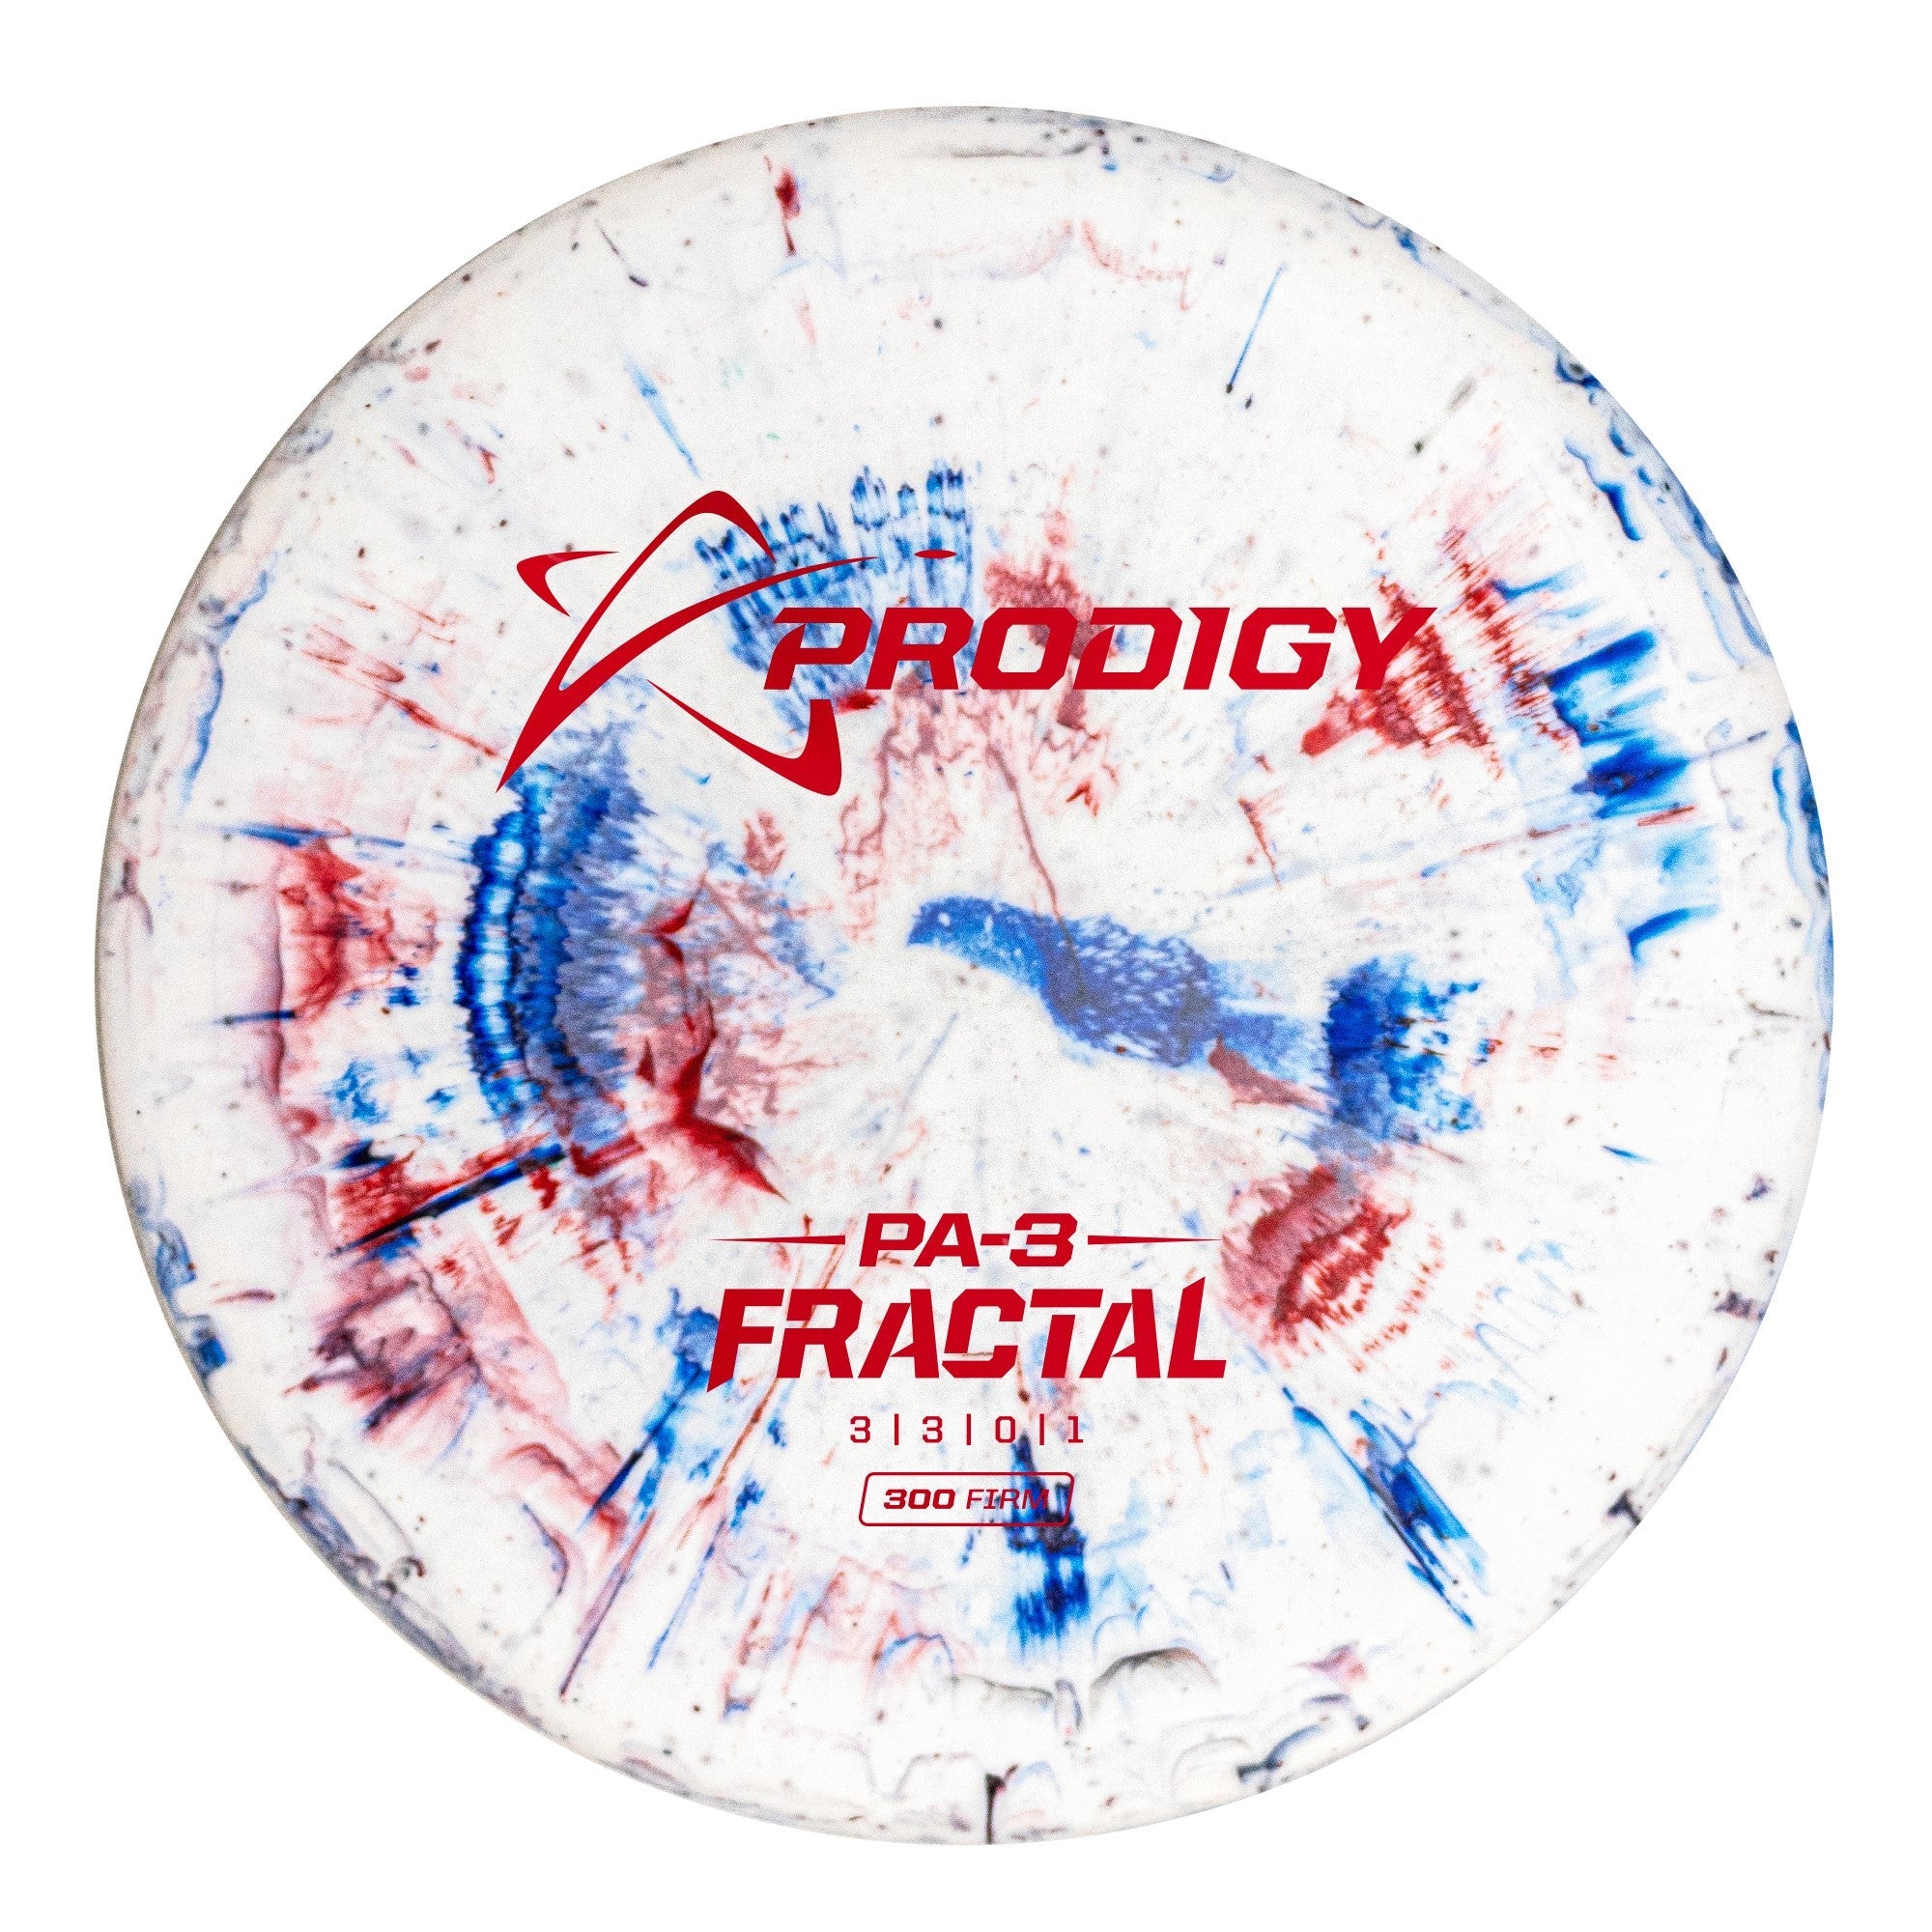 Prodigy 300 Firm Fractal PA3 Putter Golf Disc